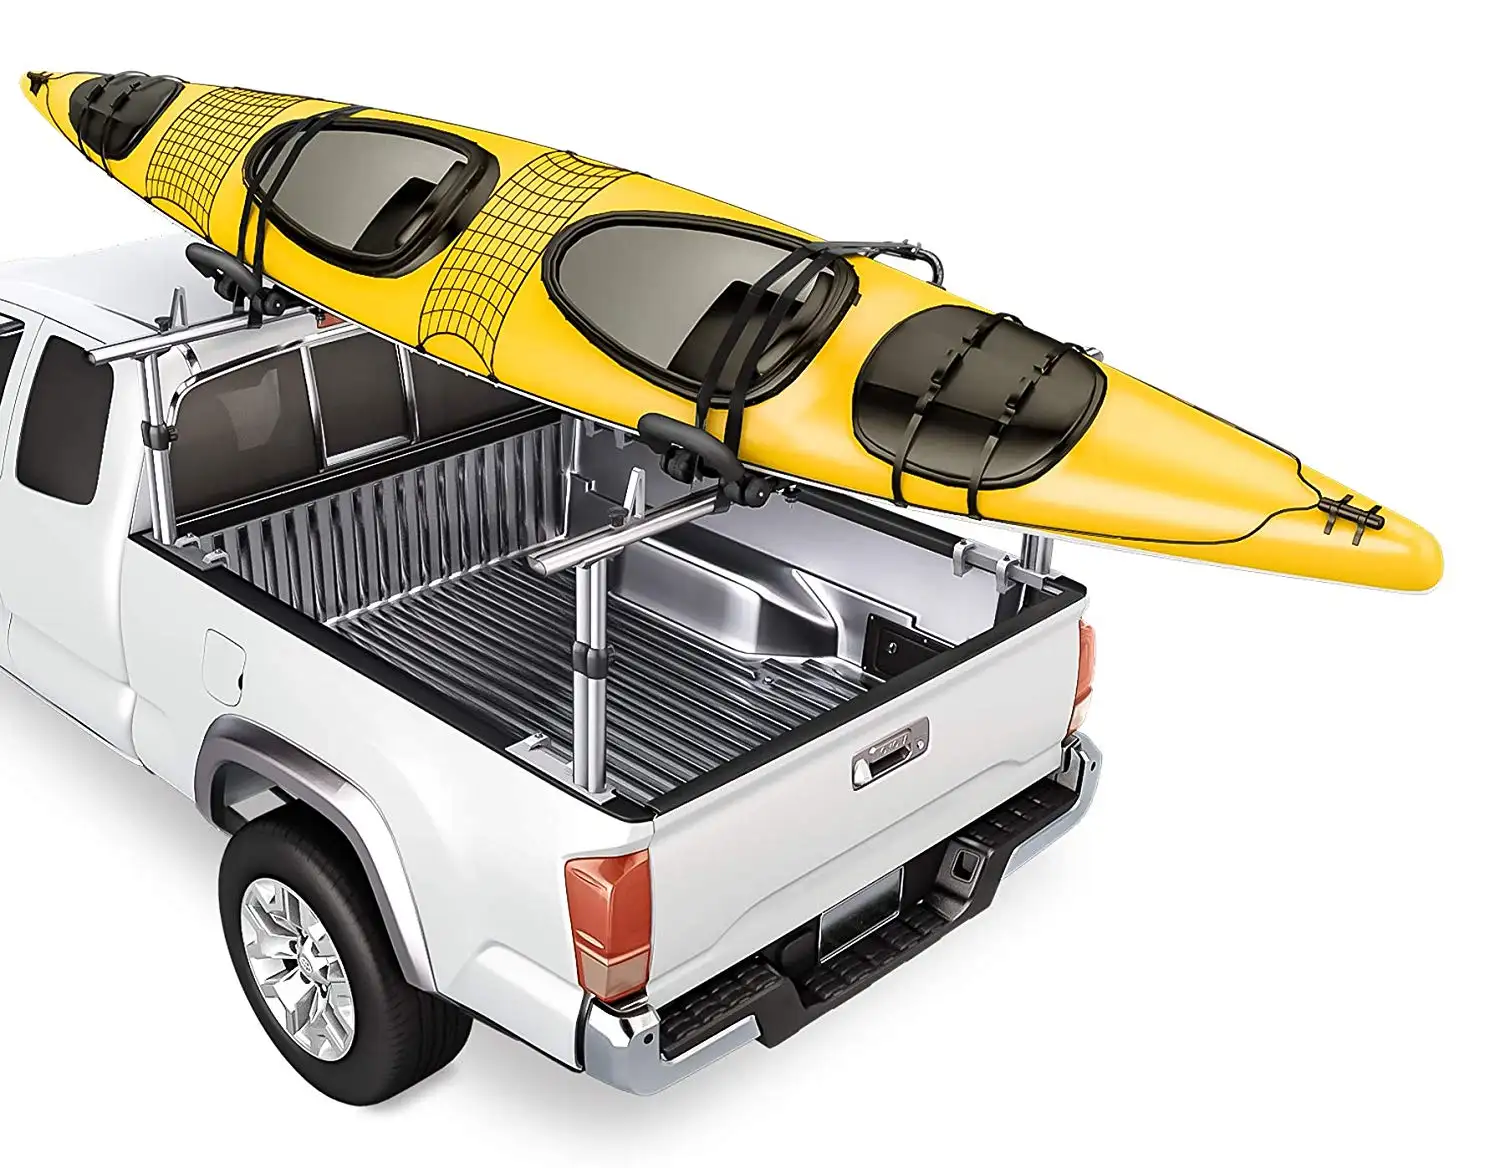 REYNOL customizable  Universal Aluminum Pickup Truck Bed Ladder Rack Heavy Duty Truck Bed Rack Two-Bar Set for Surfboard 